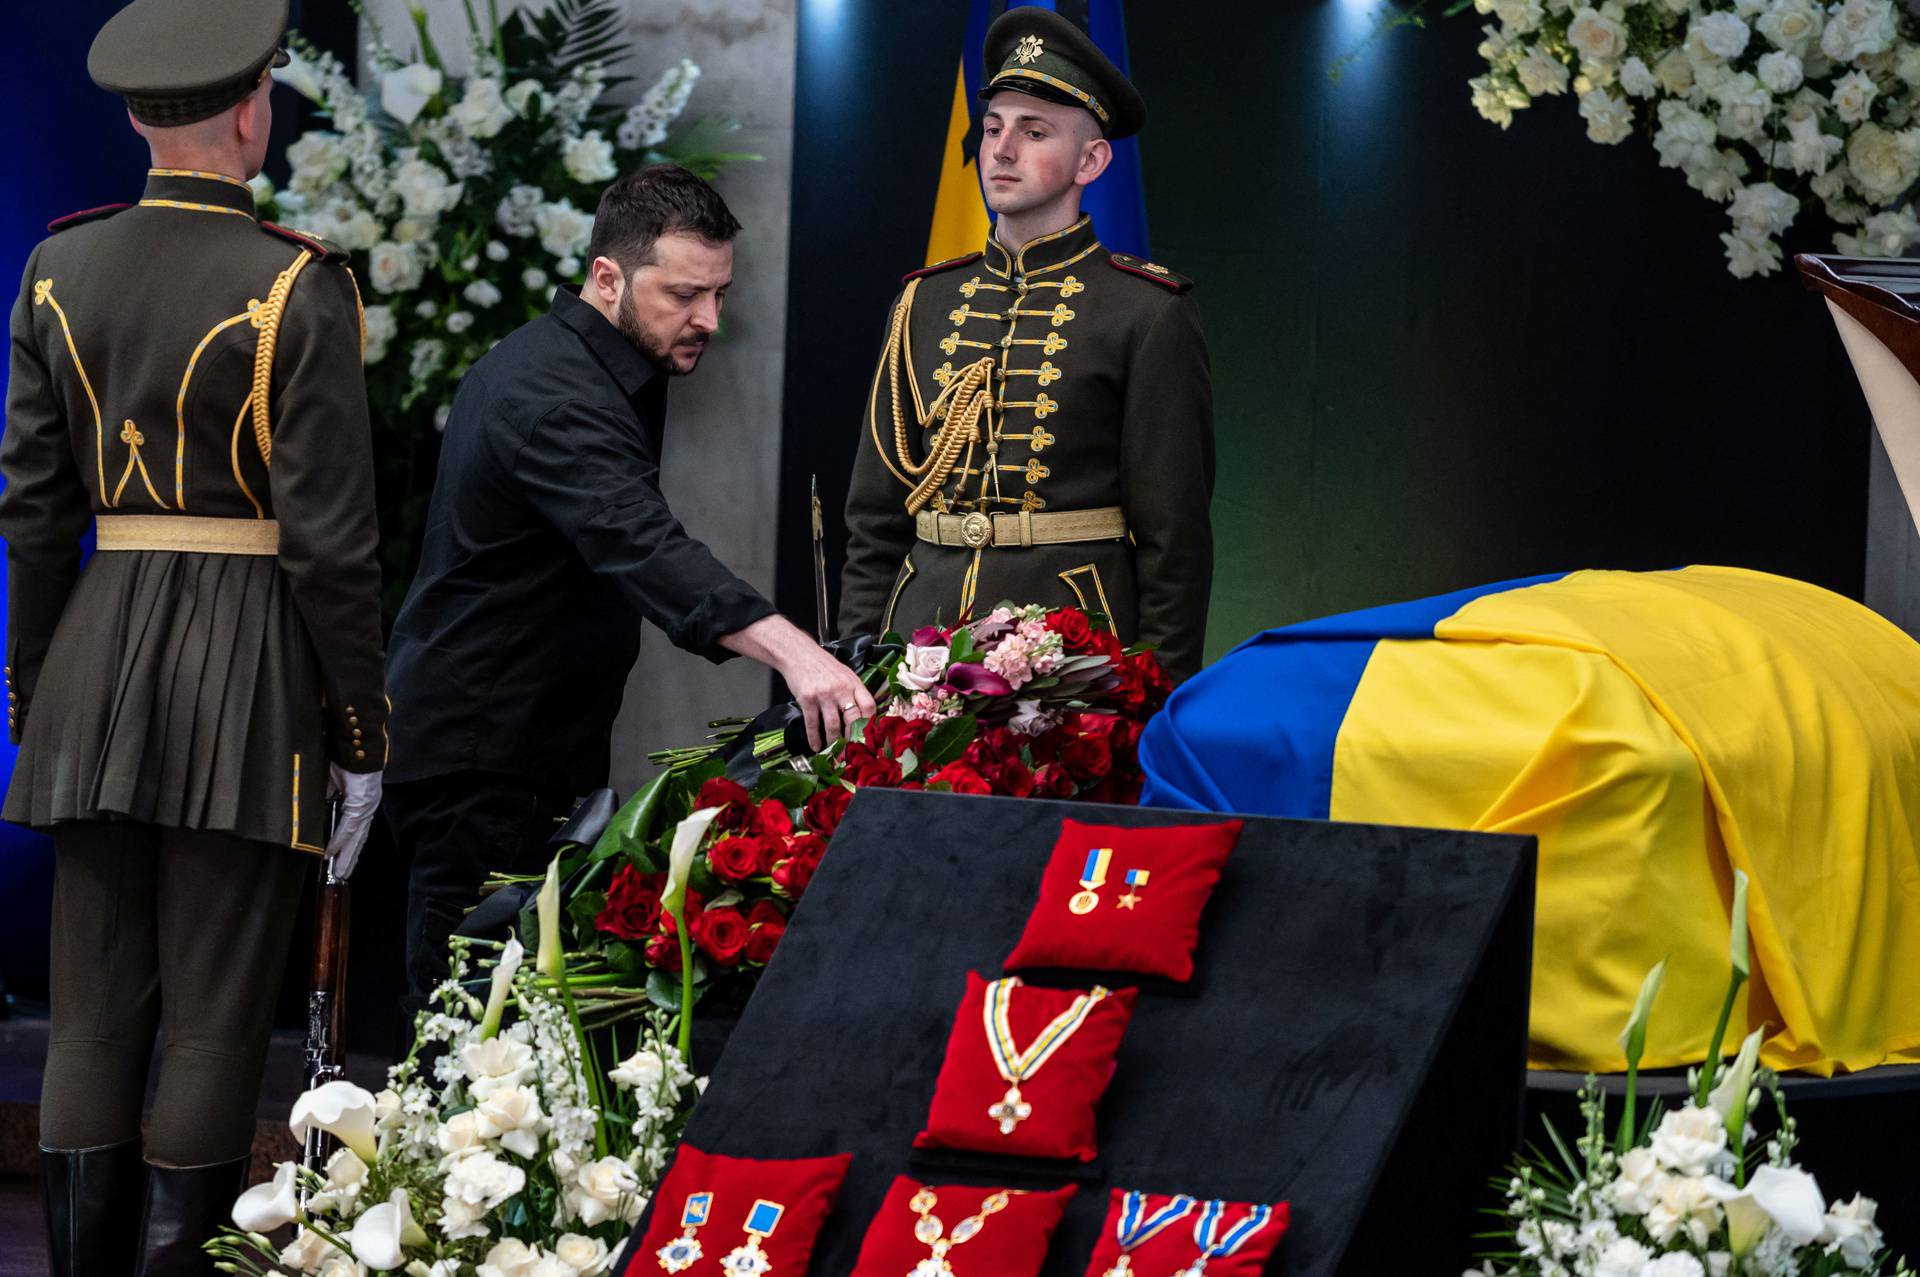 Funeral ceremony of the first president of Ukraine Leonid Kravchuk